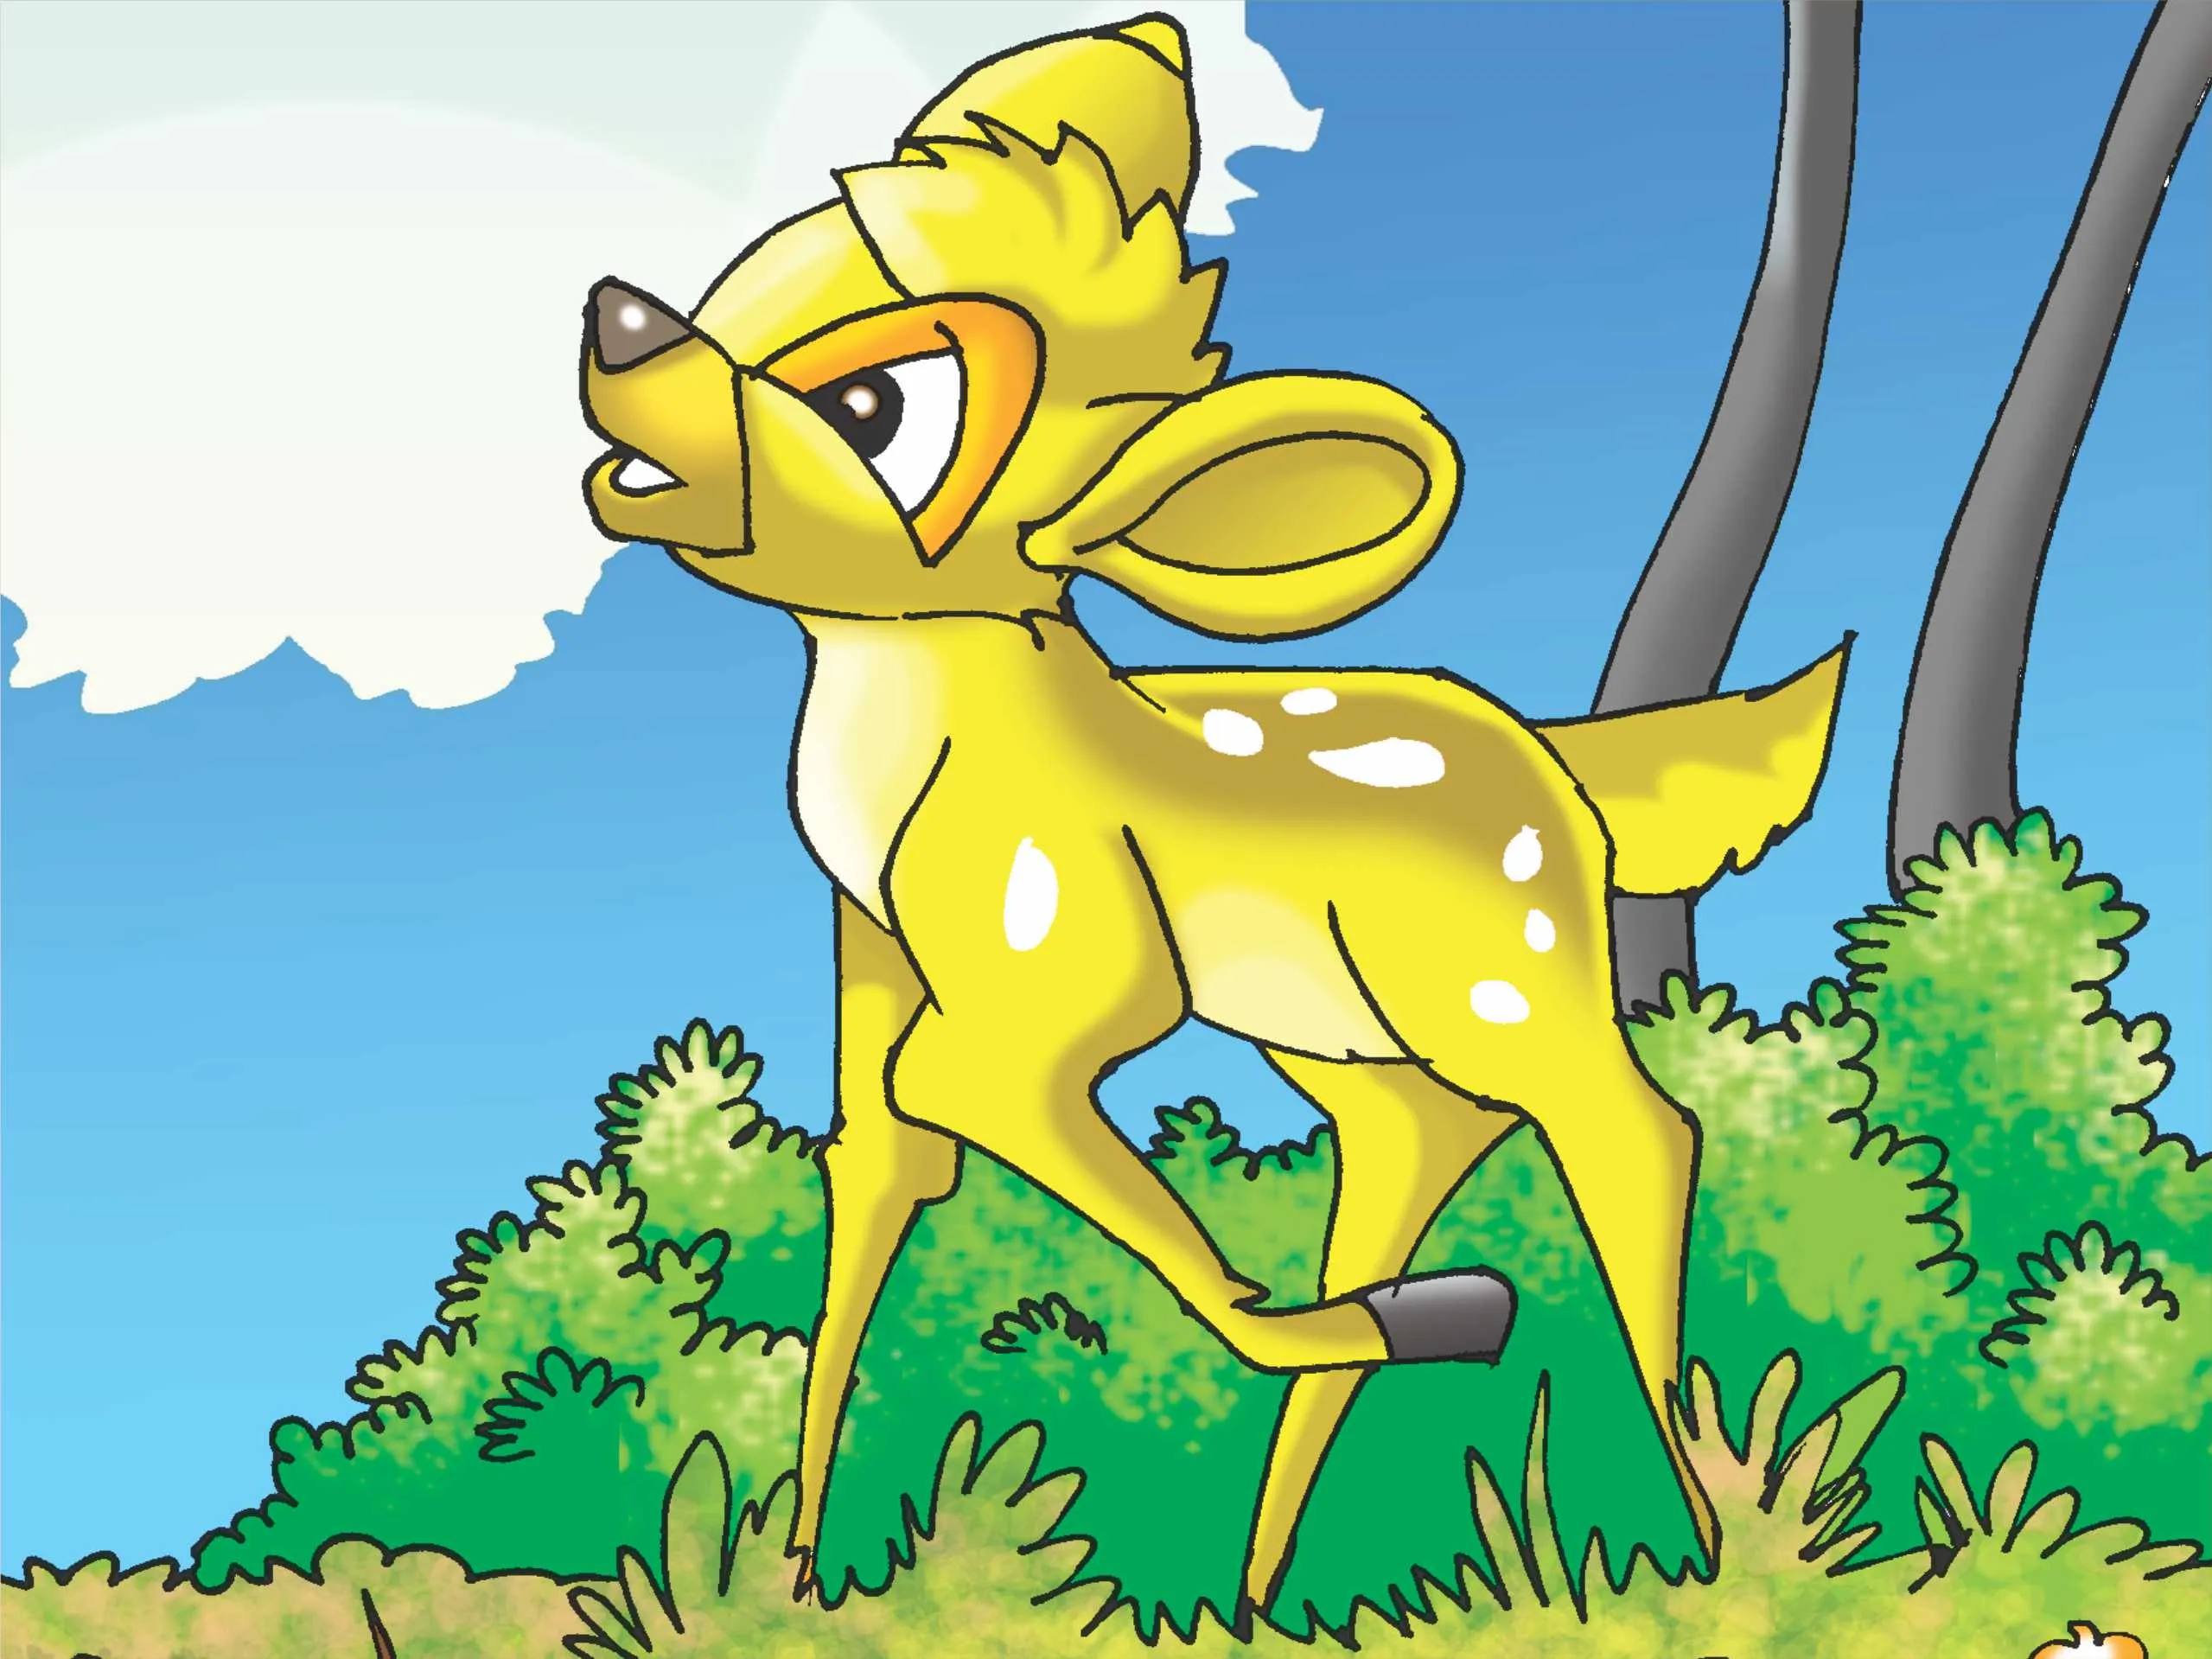 Cartoon image of a deer